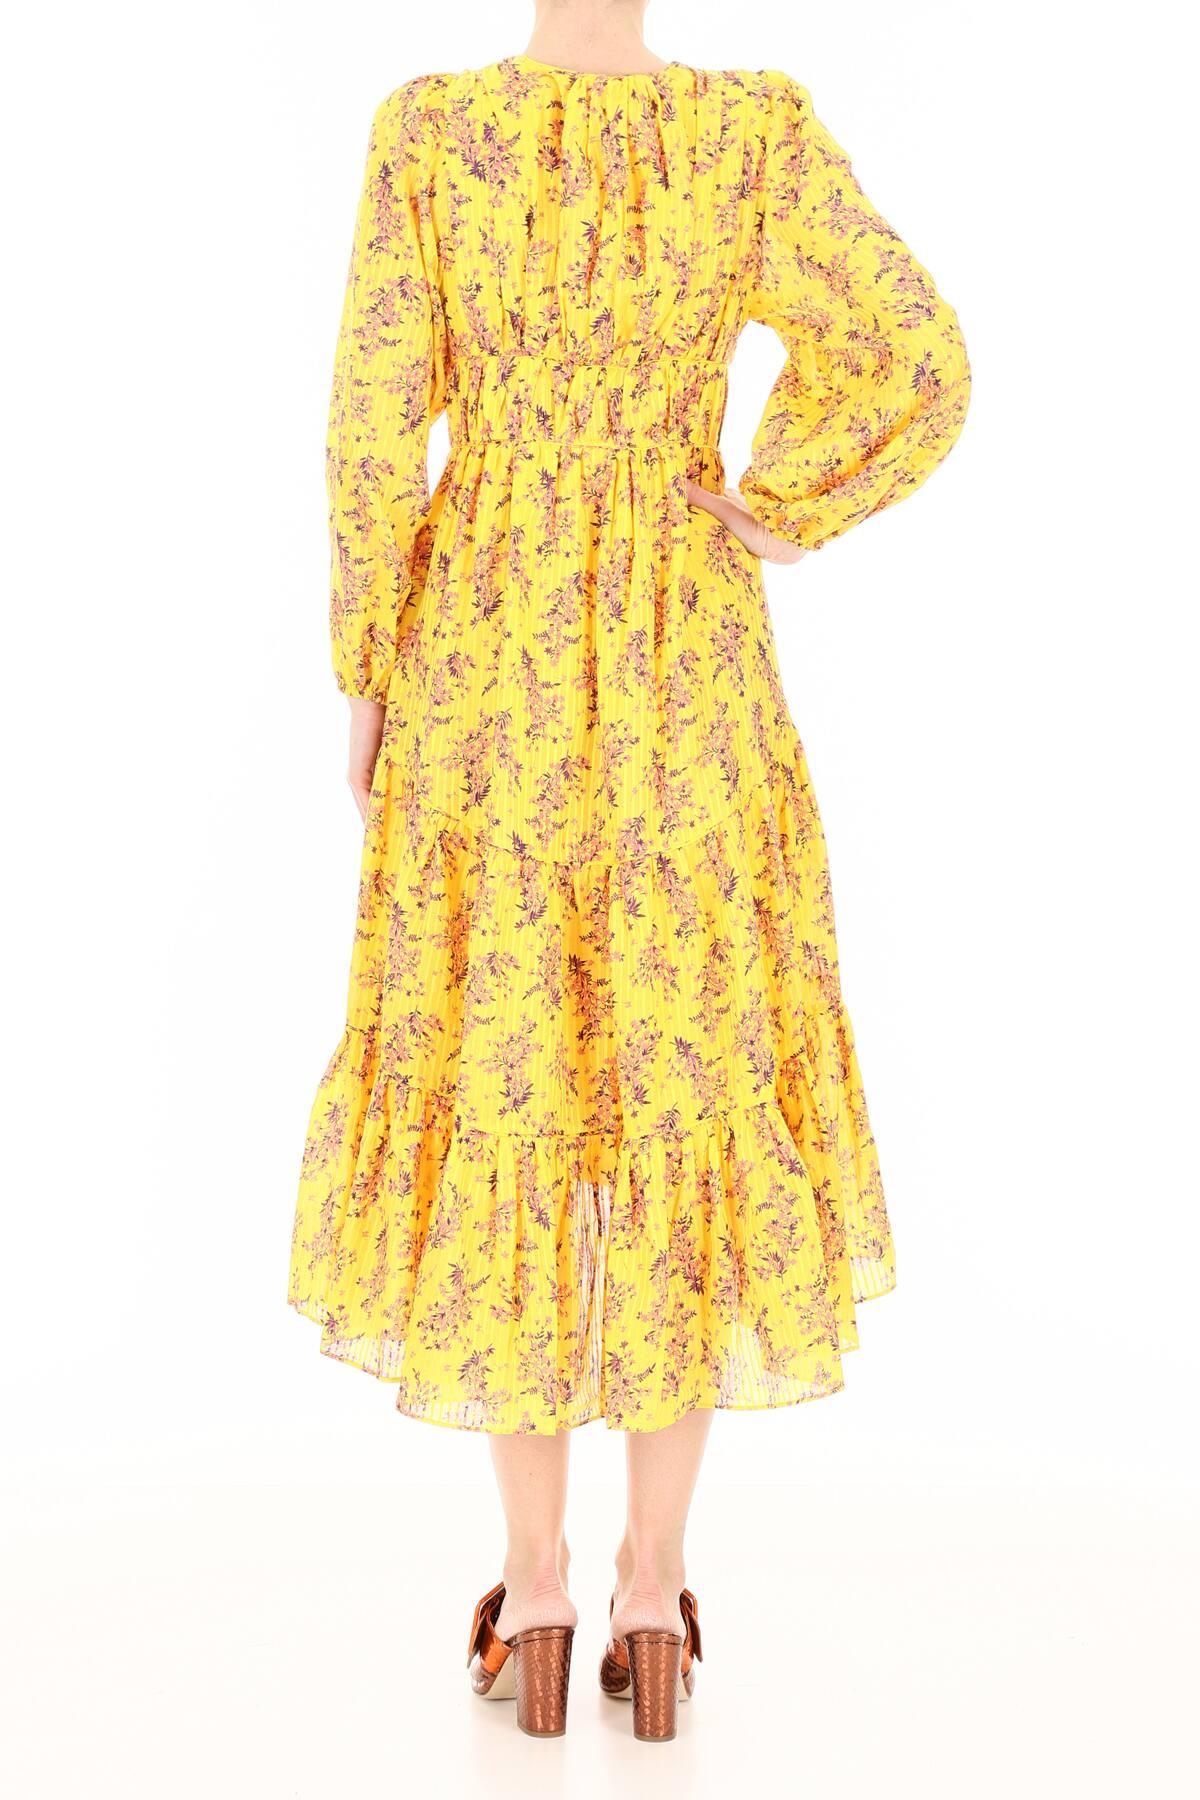 Ulla Johnson Cotton Joan Dress in Yellow - Lyst